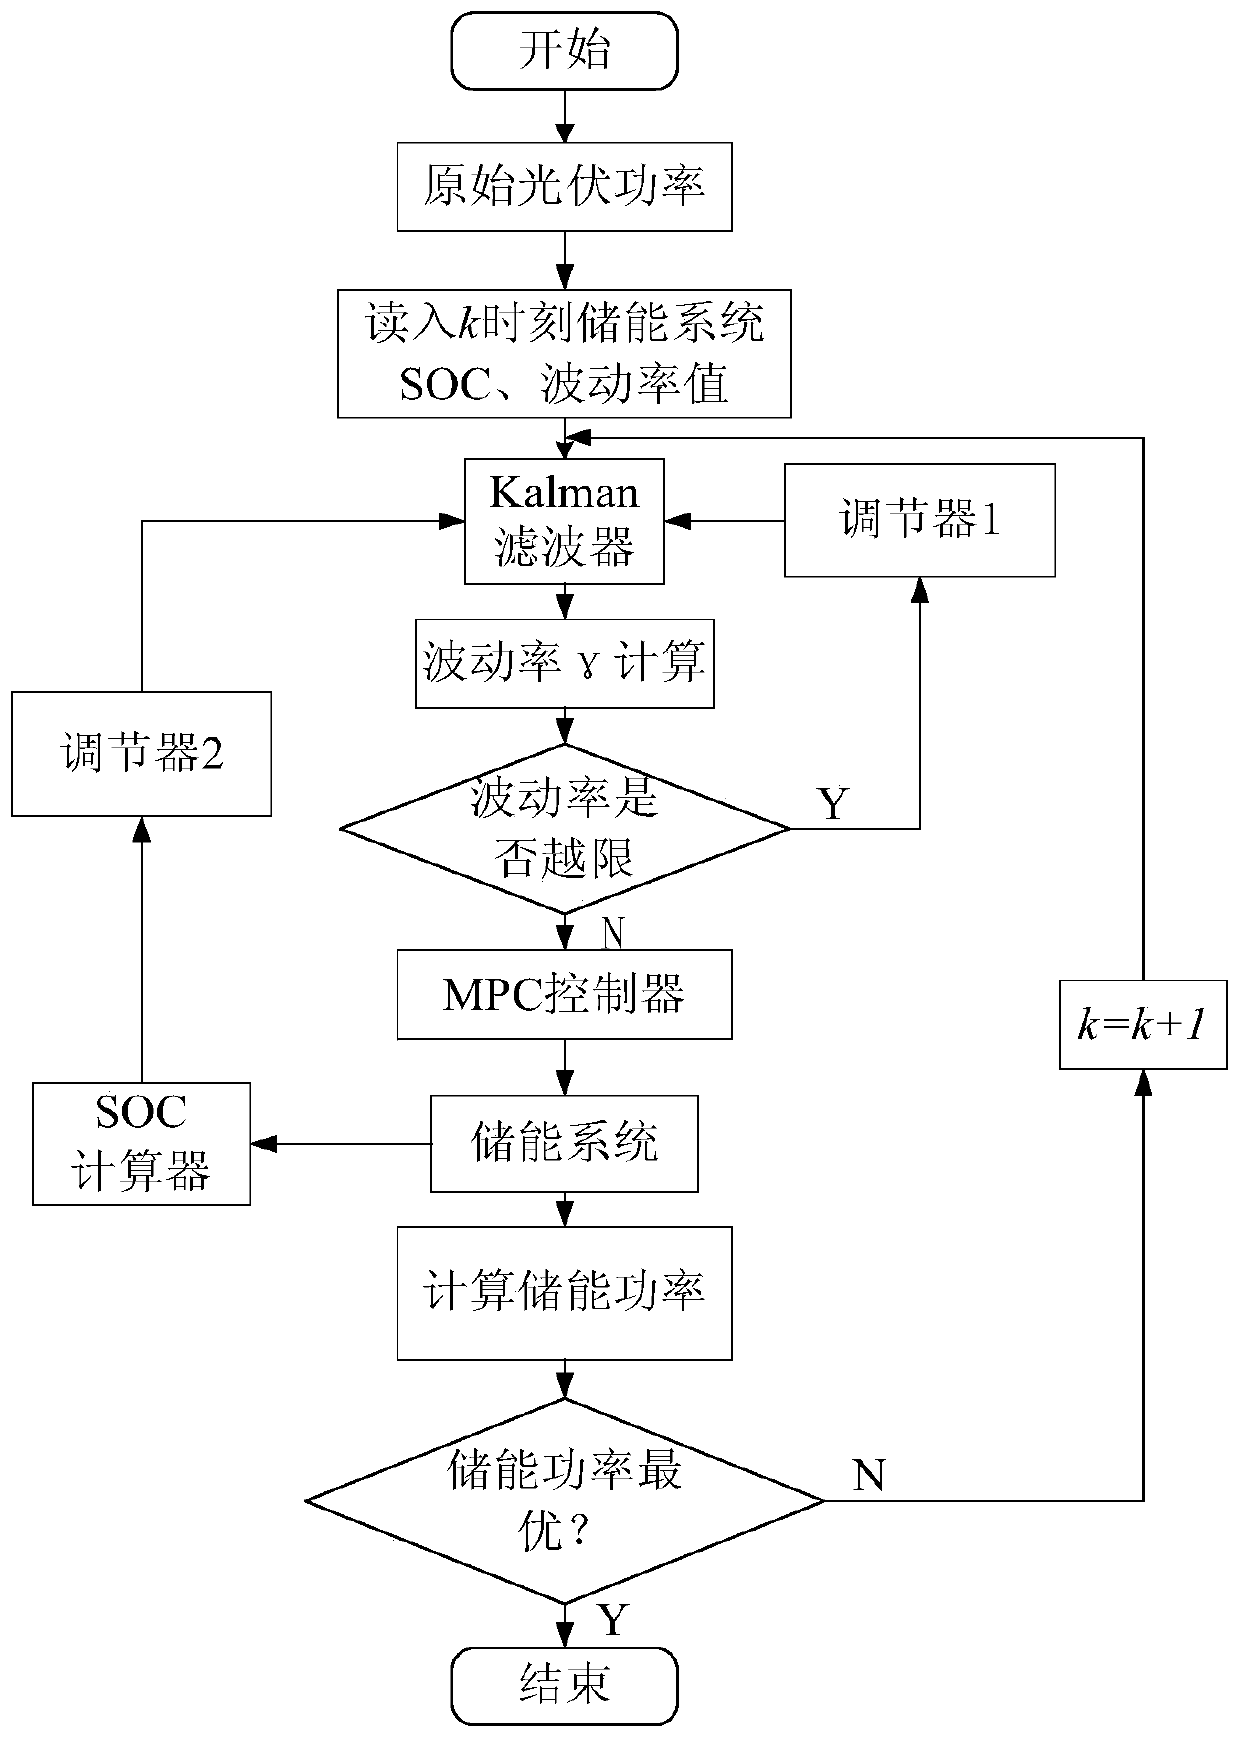 Optical storage system optimization control method based on Kalman filtering and model predictive control